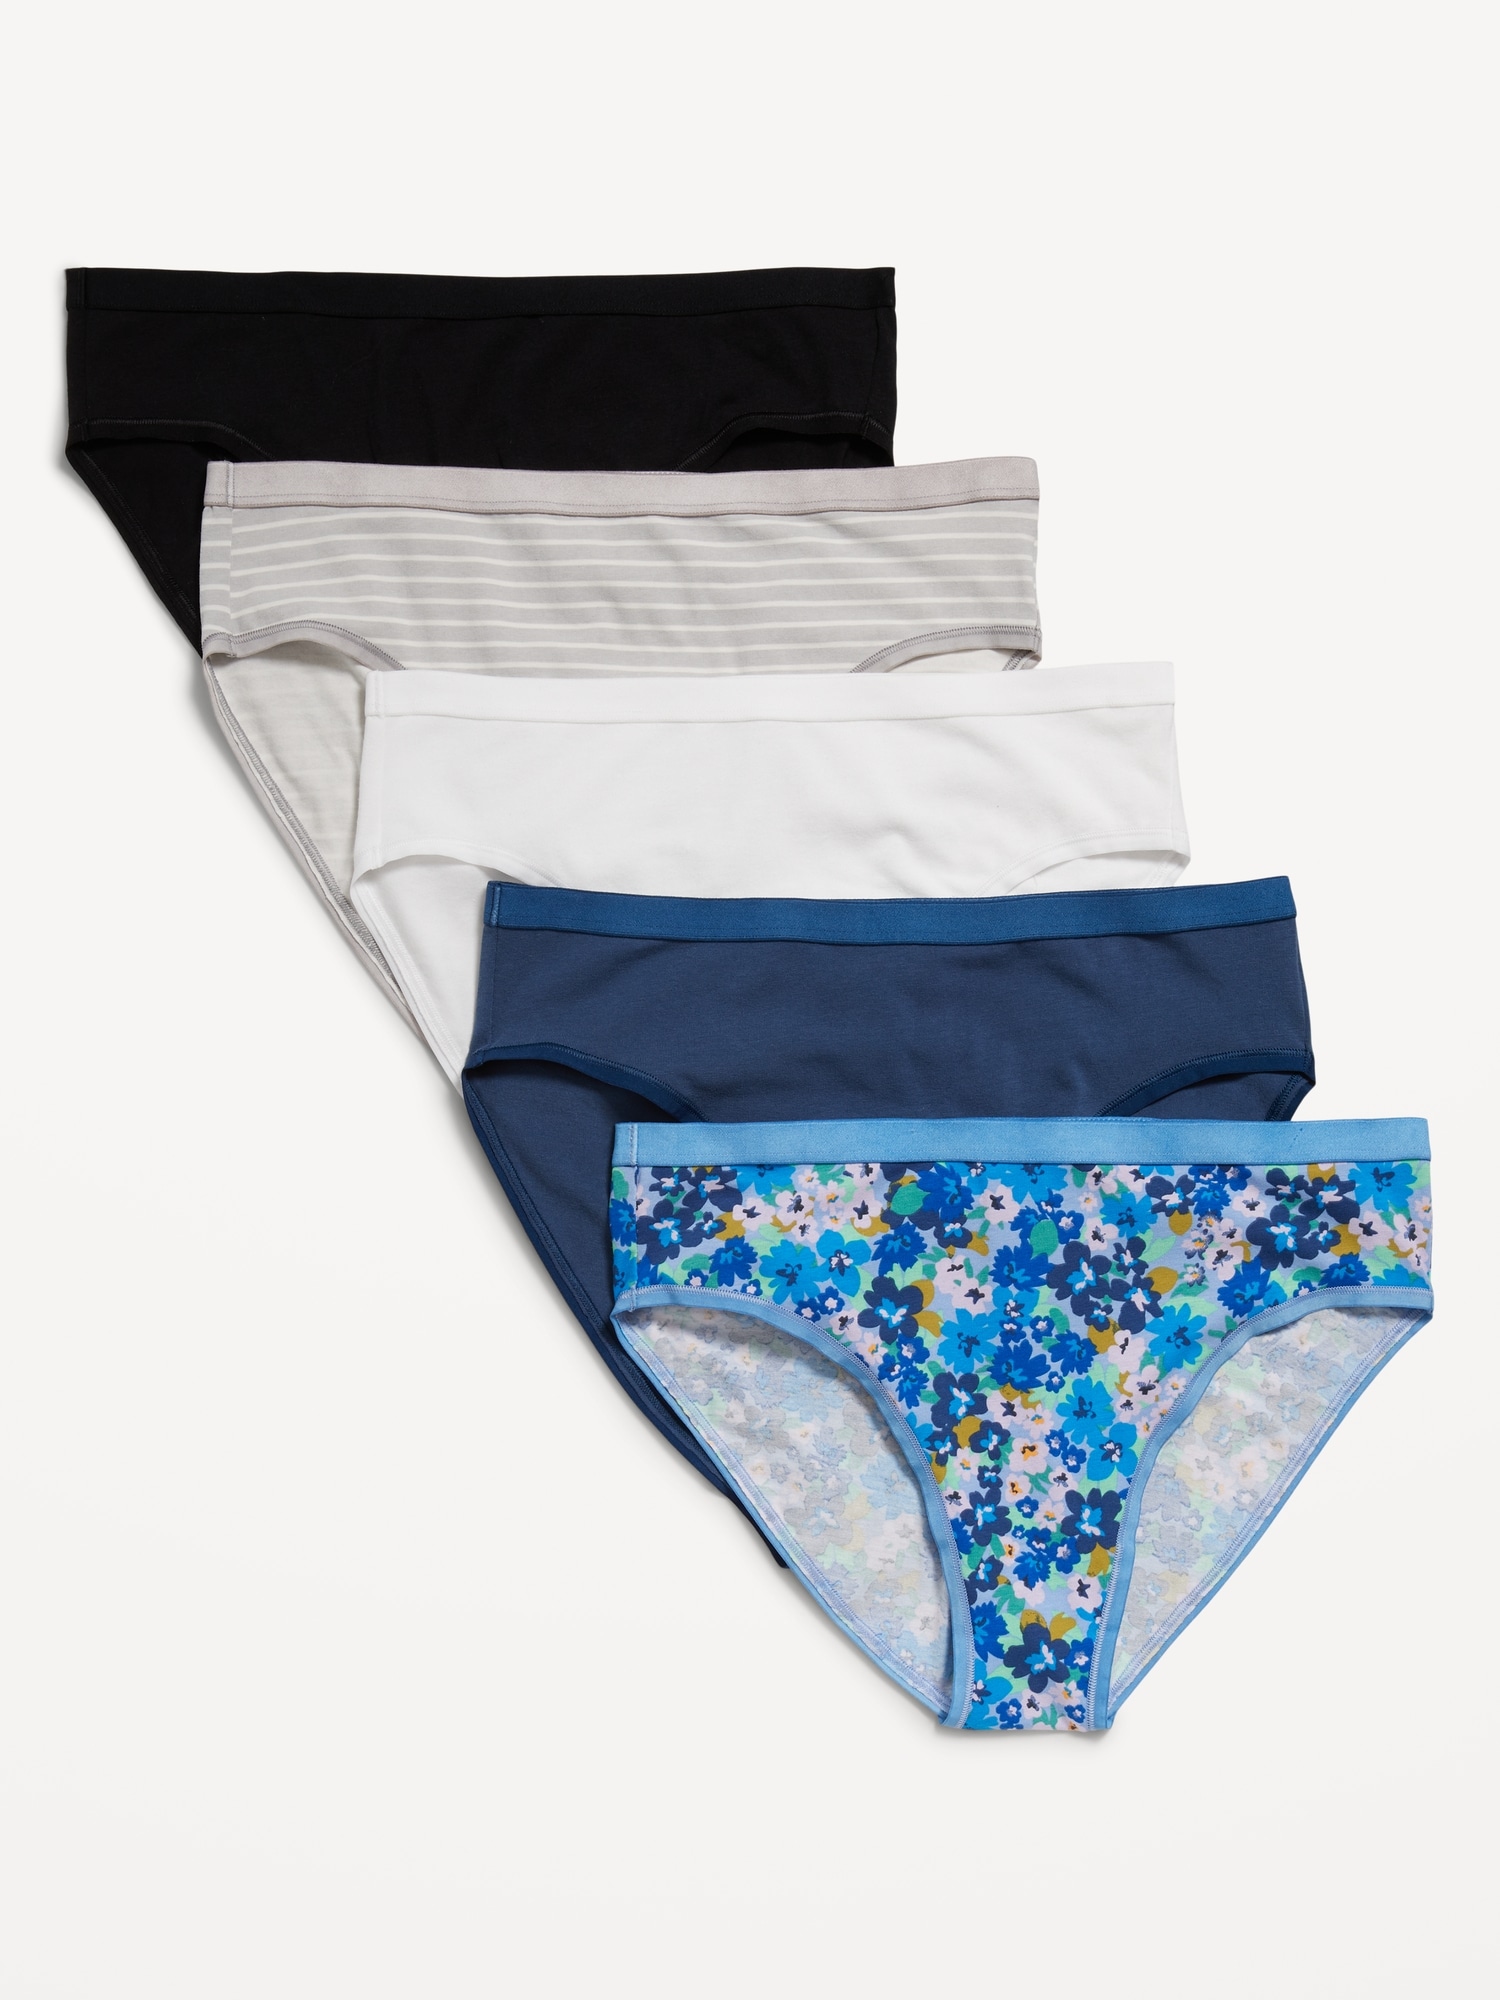 GAP unisex baby Briefs Bikini Style Underwear, Multi, 2-3T US at